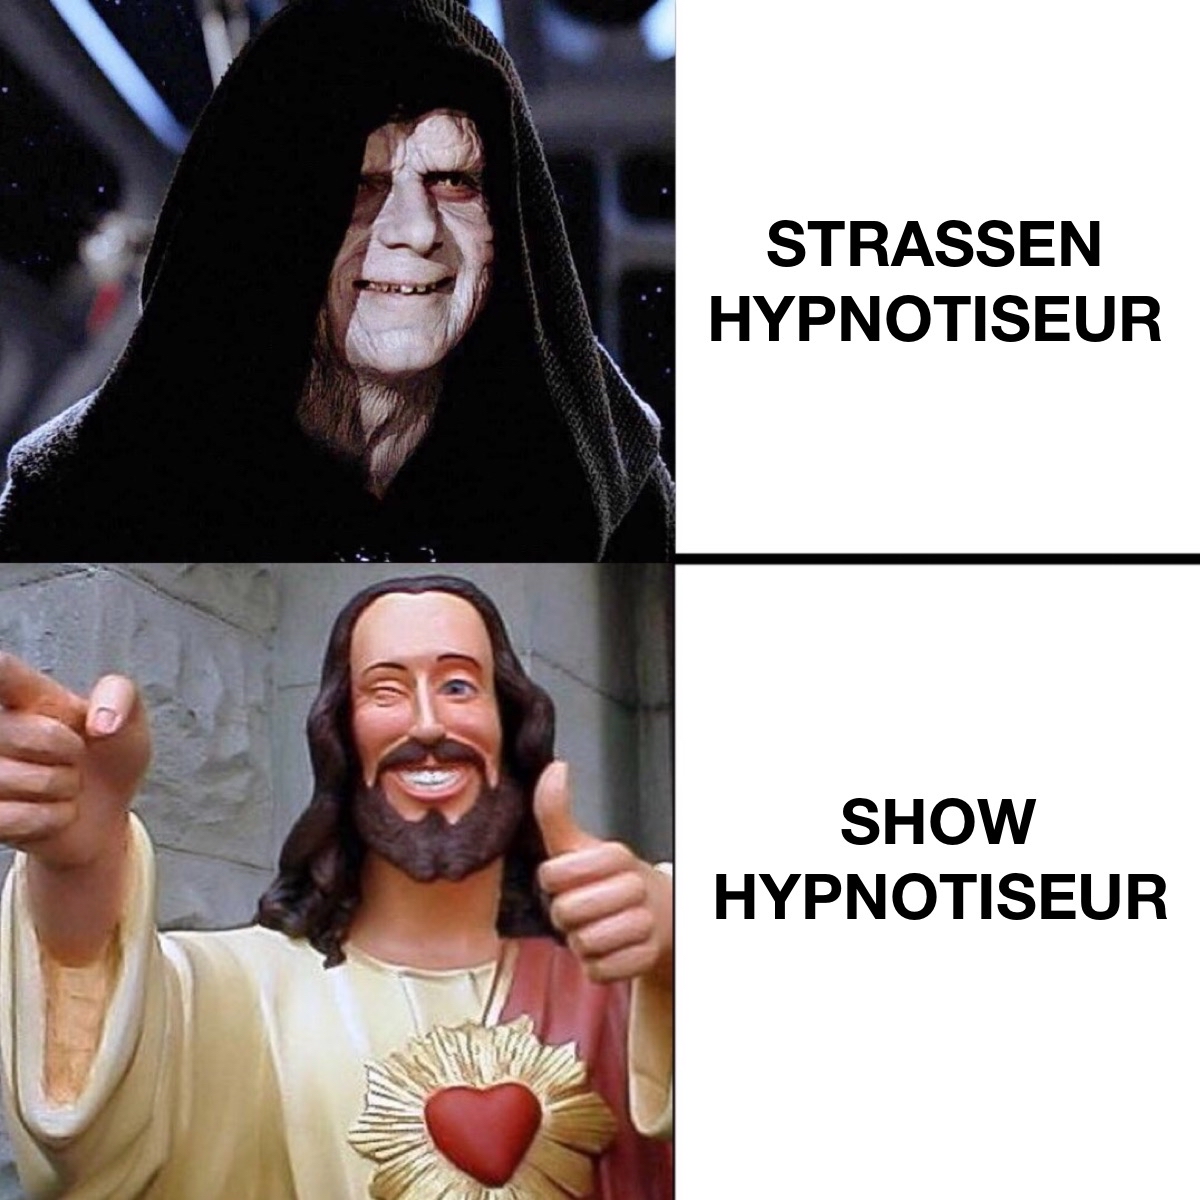 strassenhypnotiseur_vs_showhypnotiseur_meme.jpeg